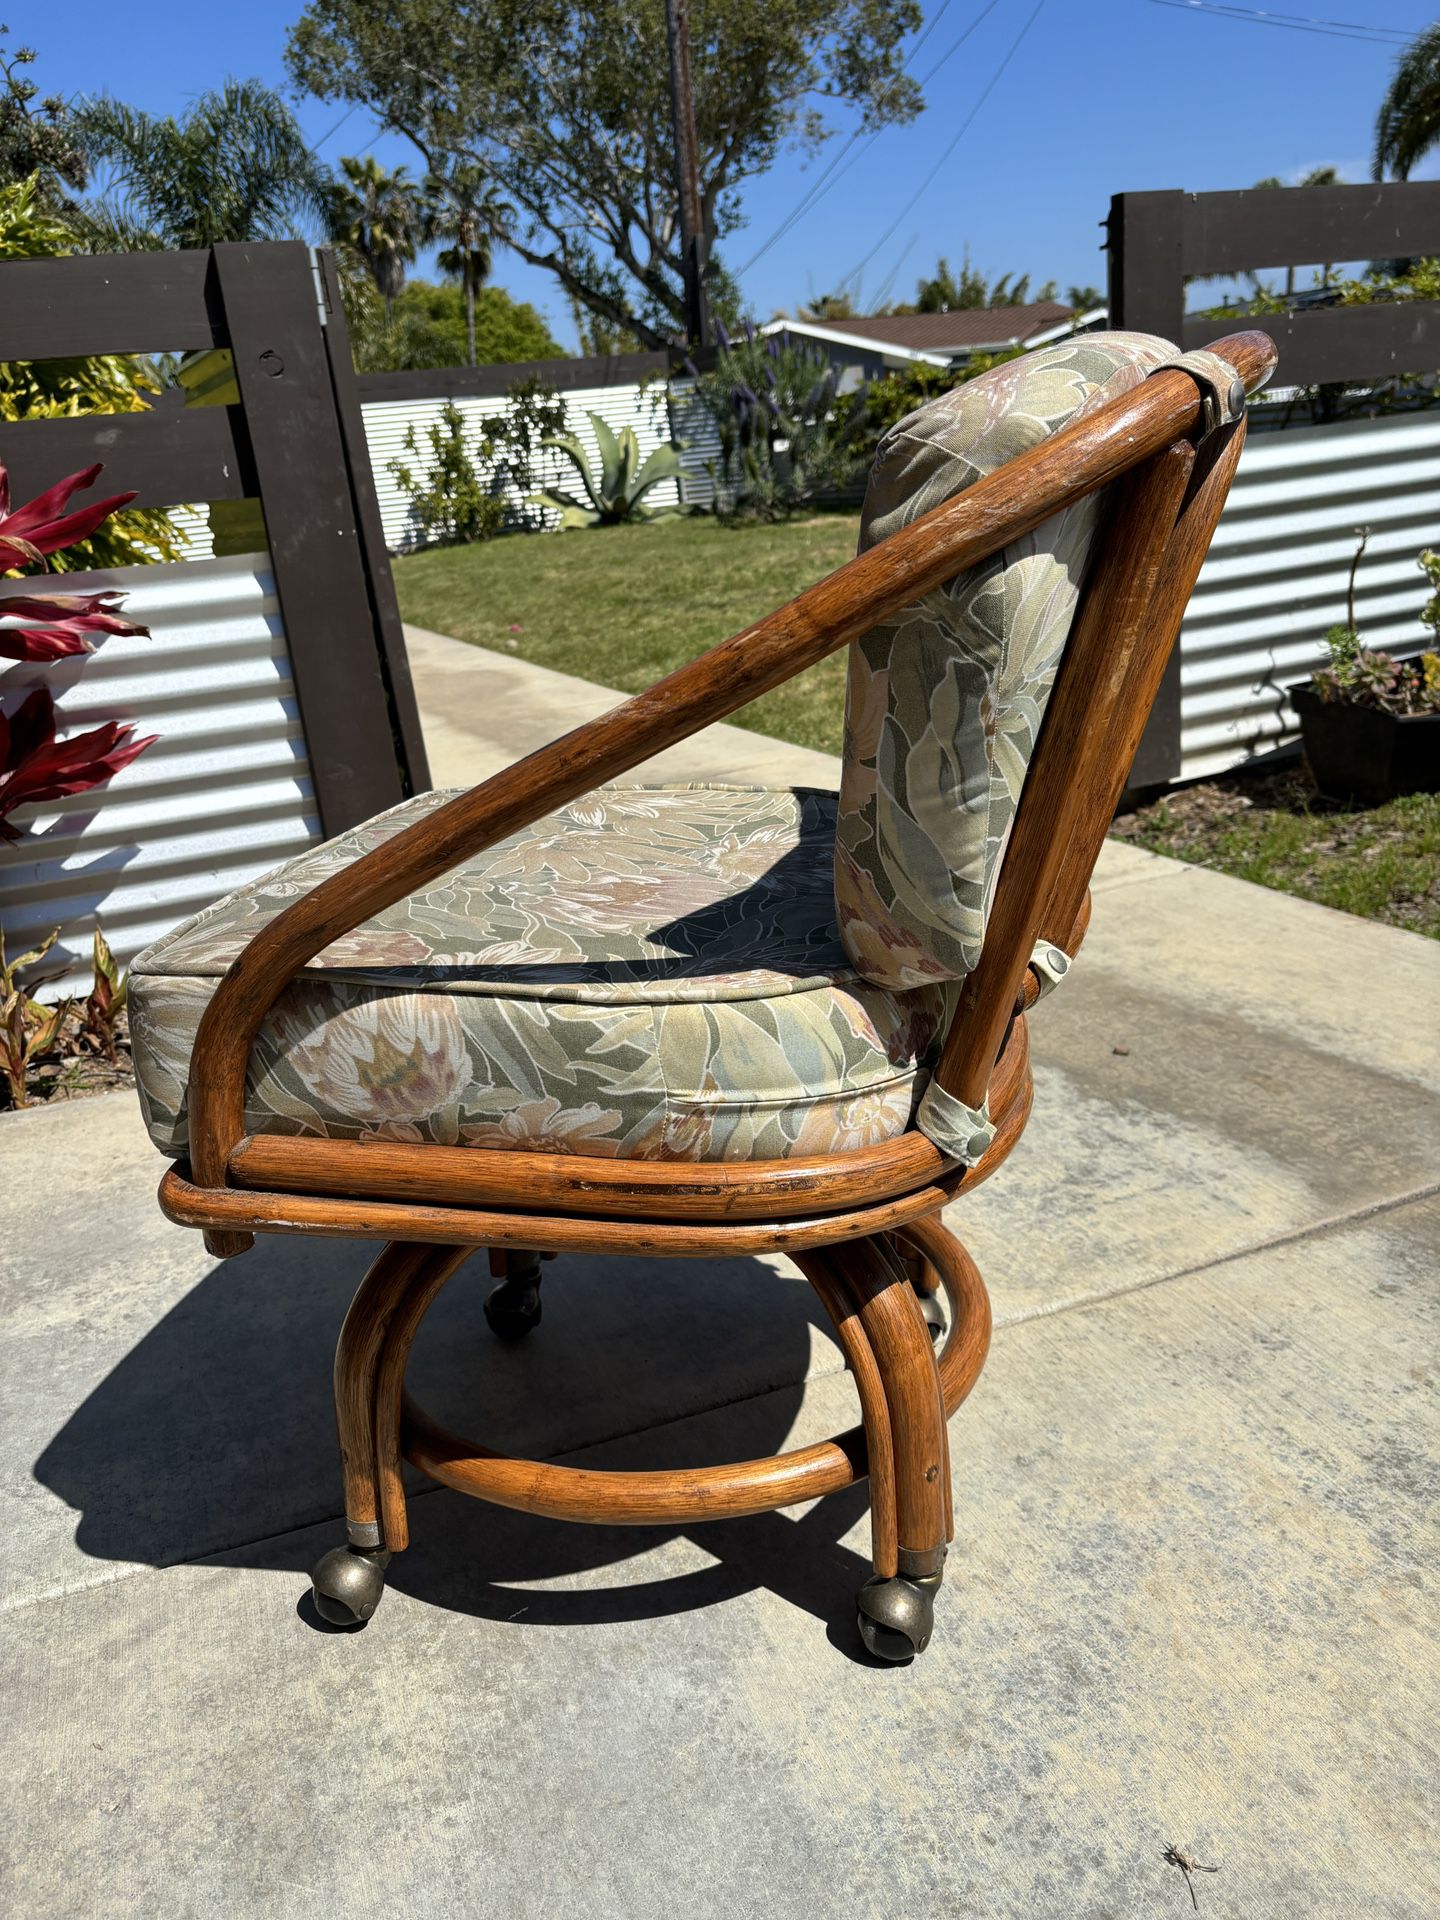 Vintage Swivel Chair / Desk Chair